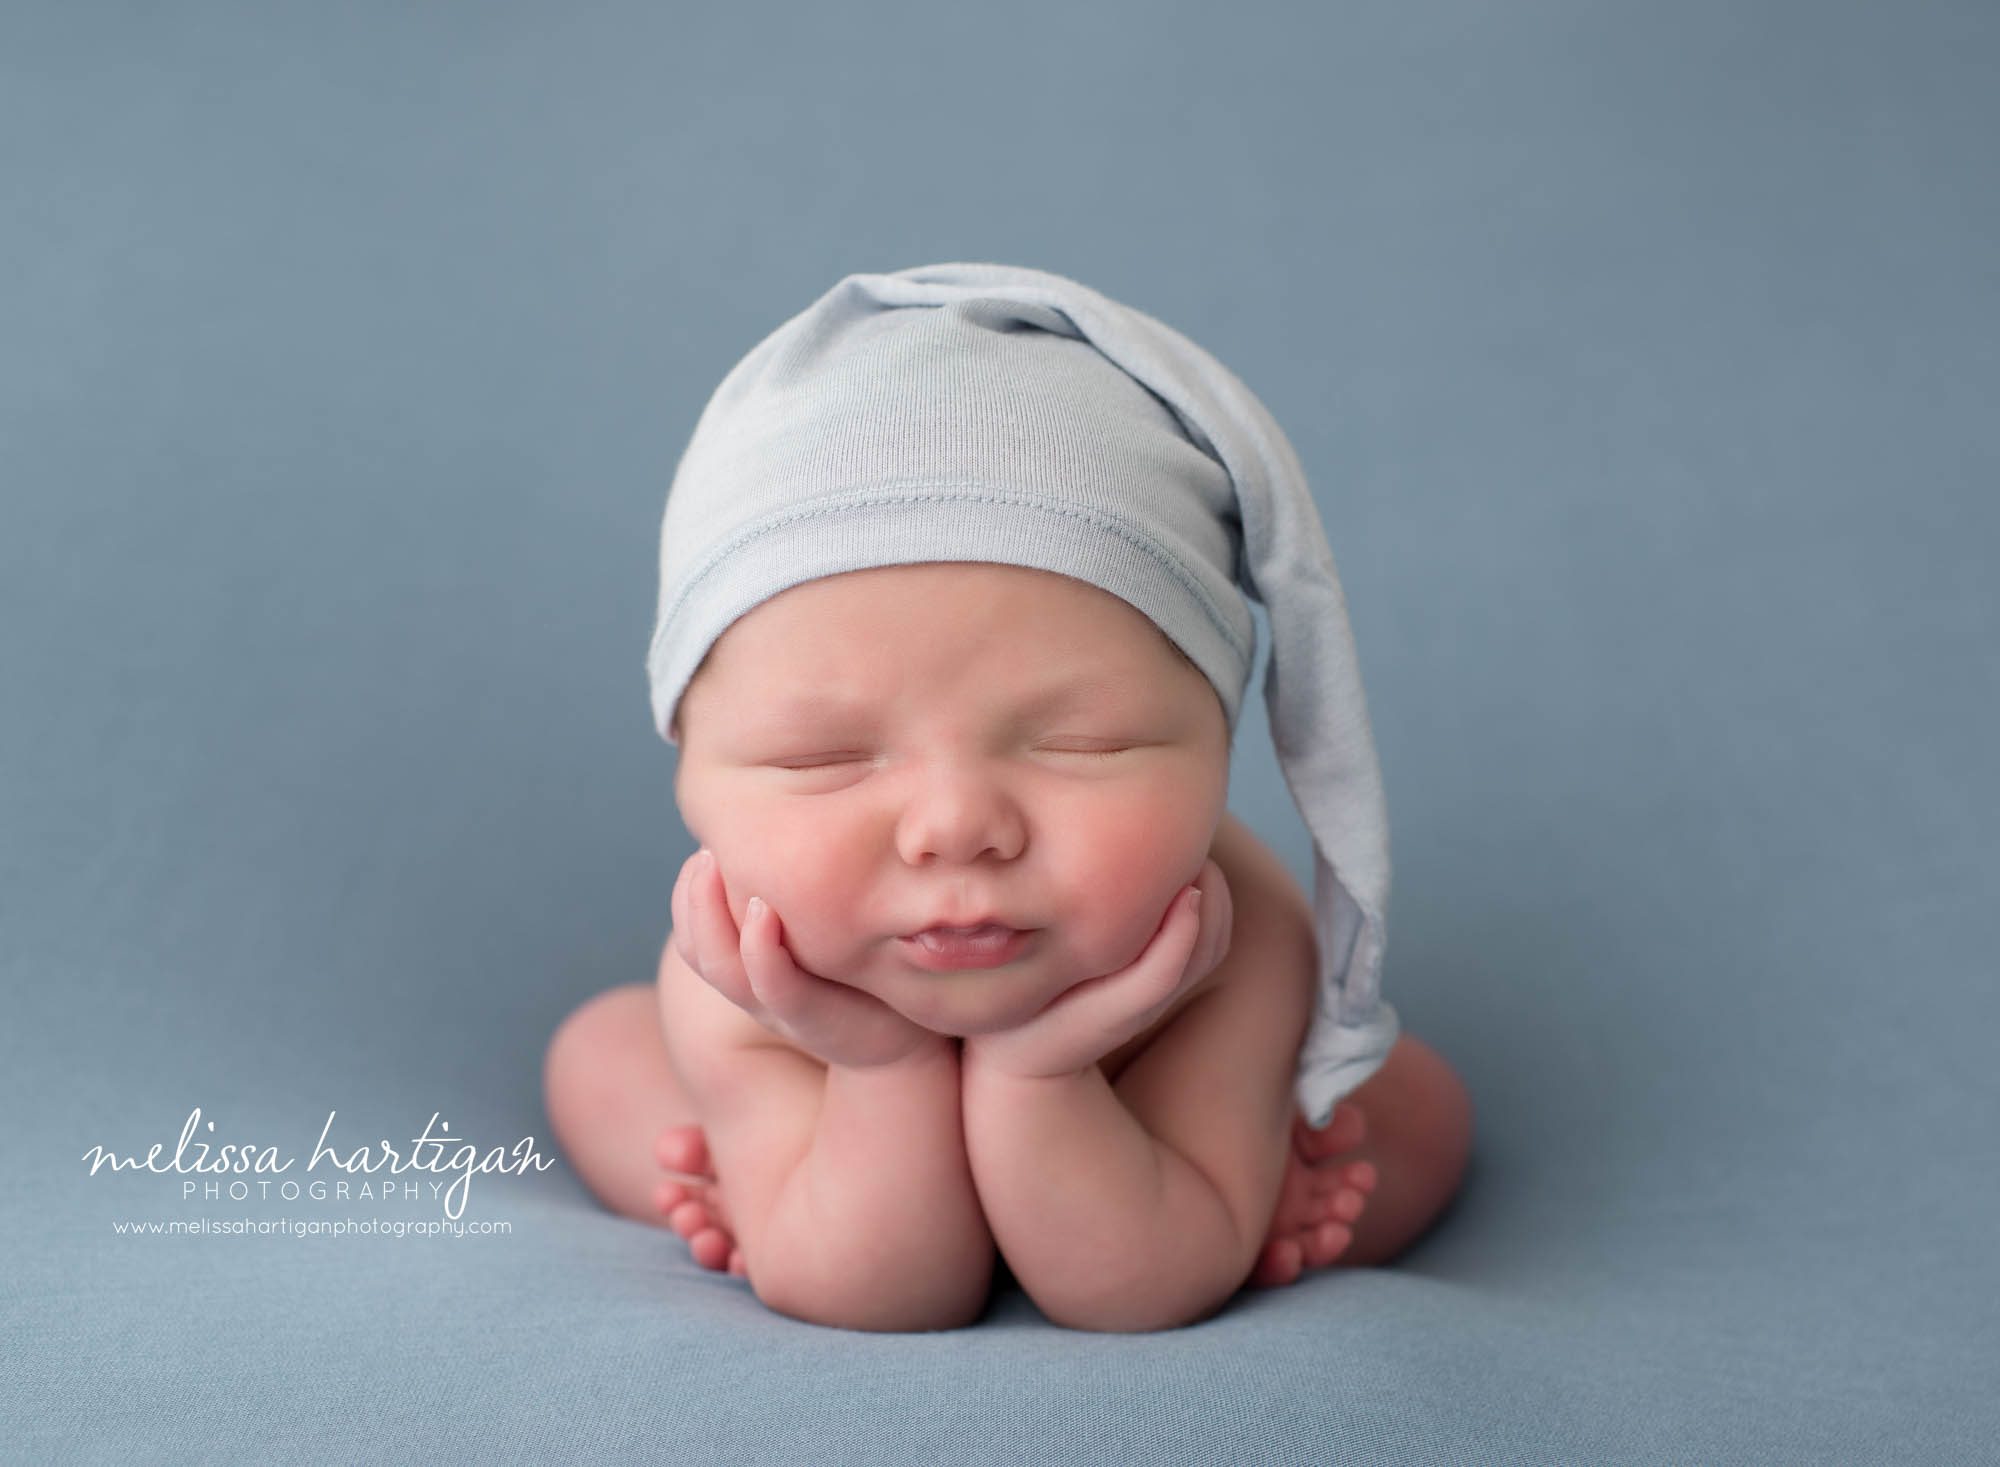 newborn baby boyposed froggy pose on blue backdrop CT twin newborn photography